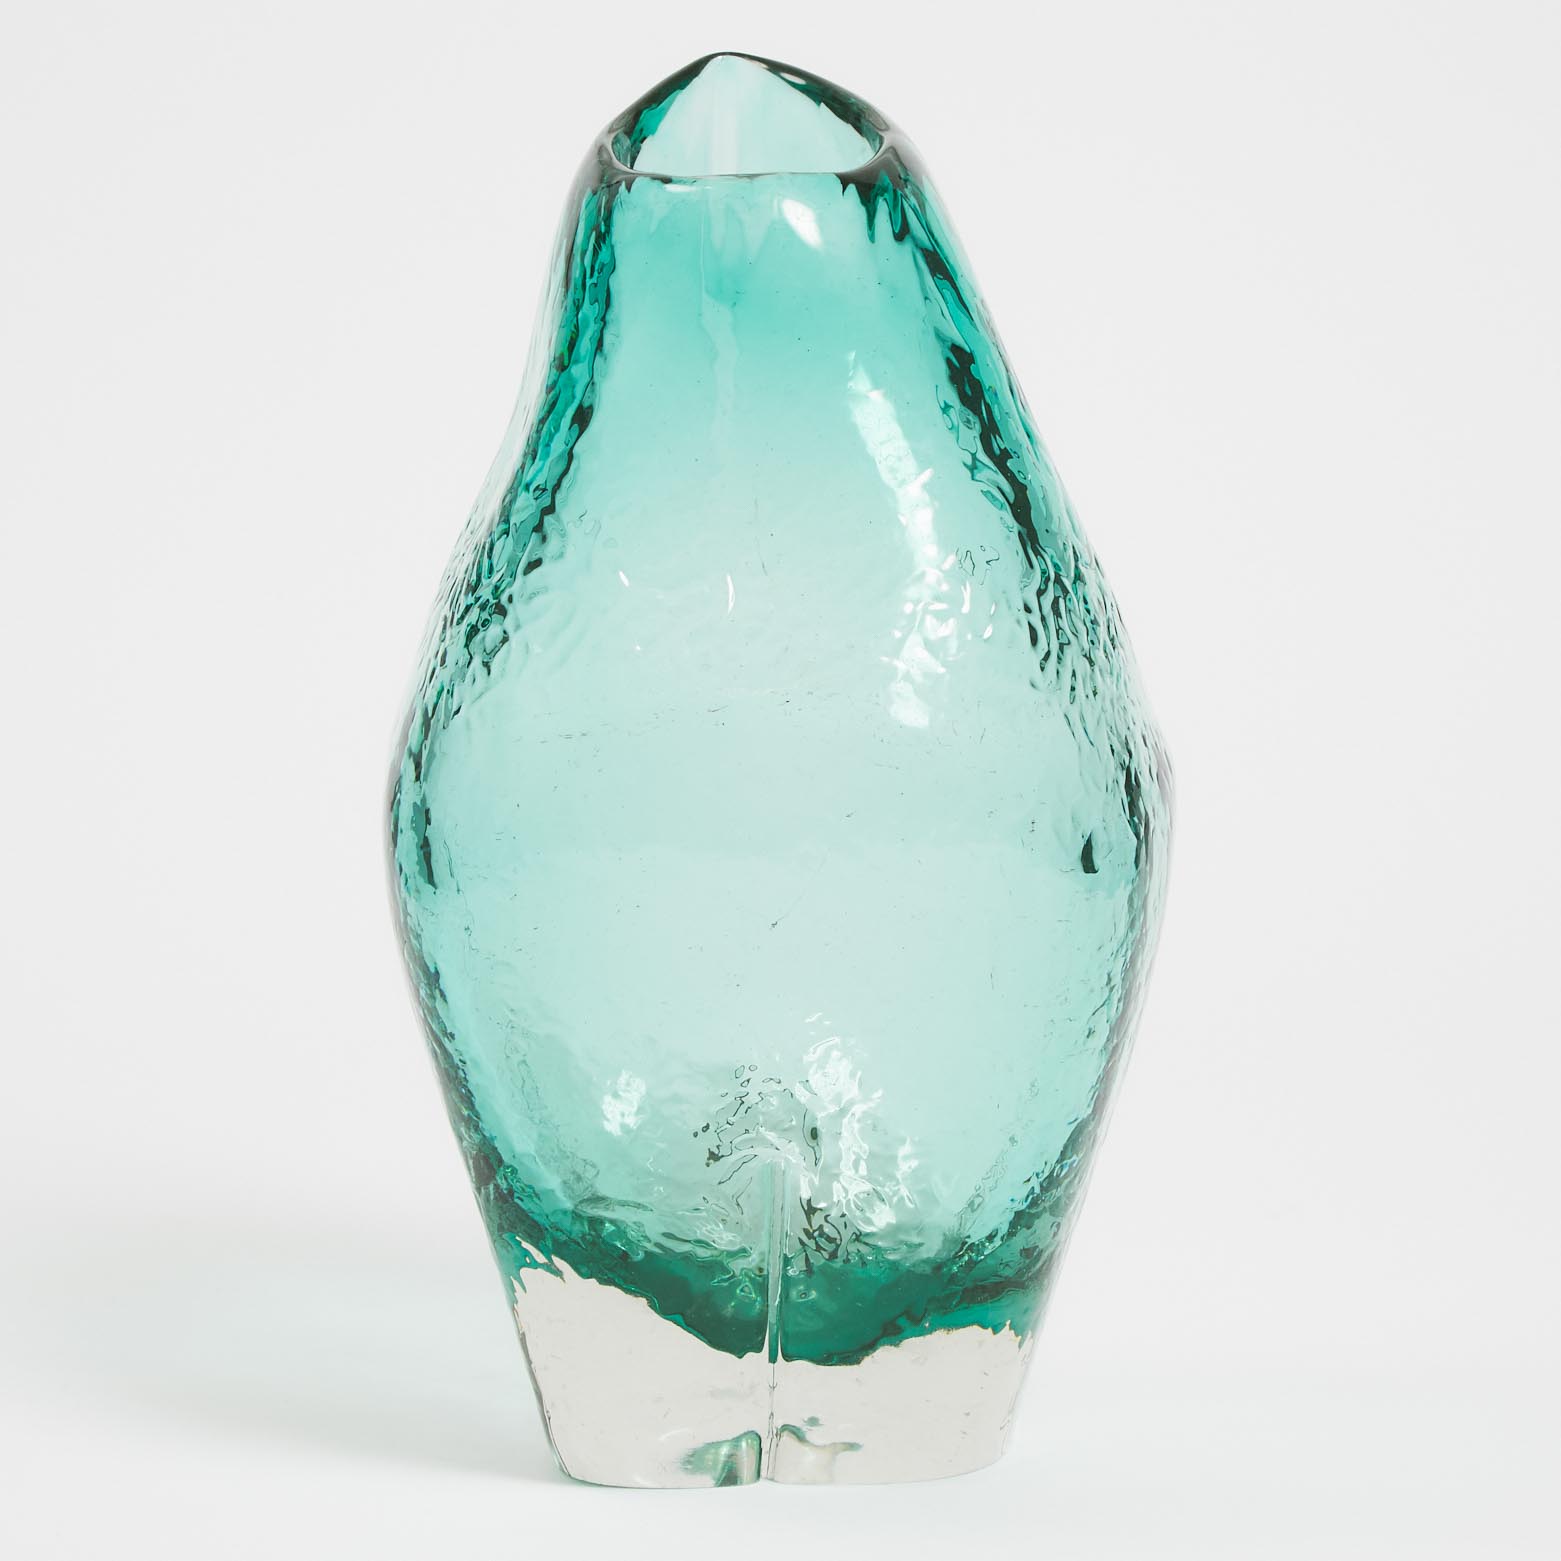 Venini 'Informale' Green Glass Vase, Fulvio Bianconi, c.1968